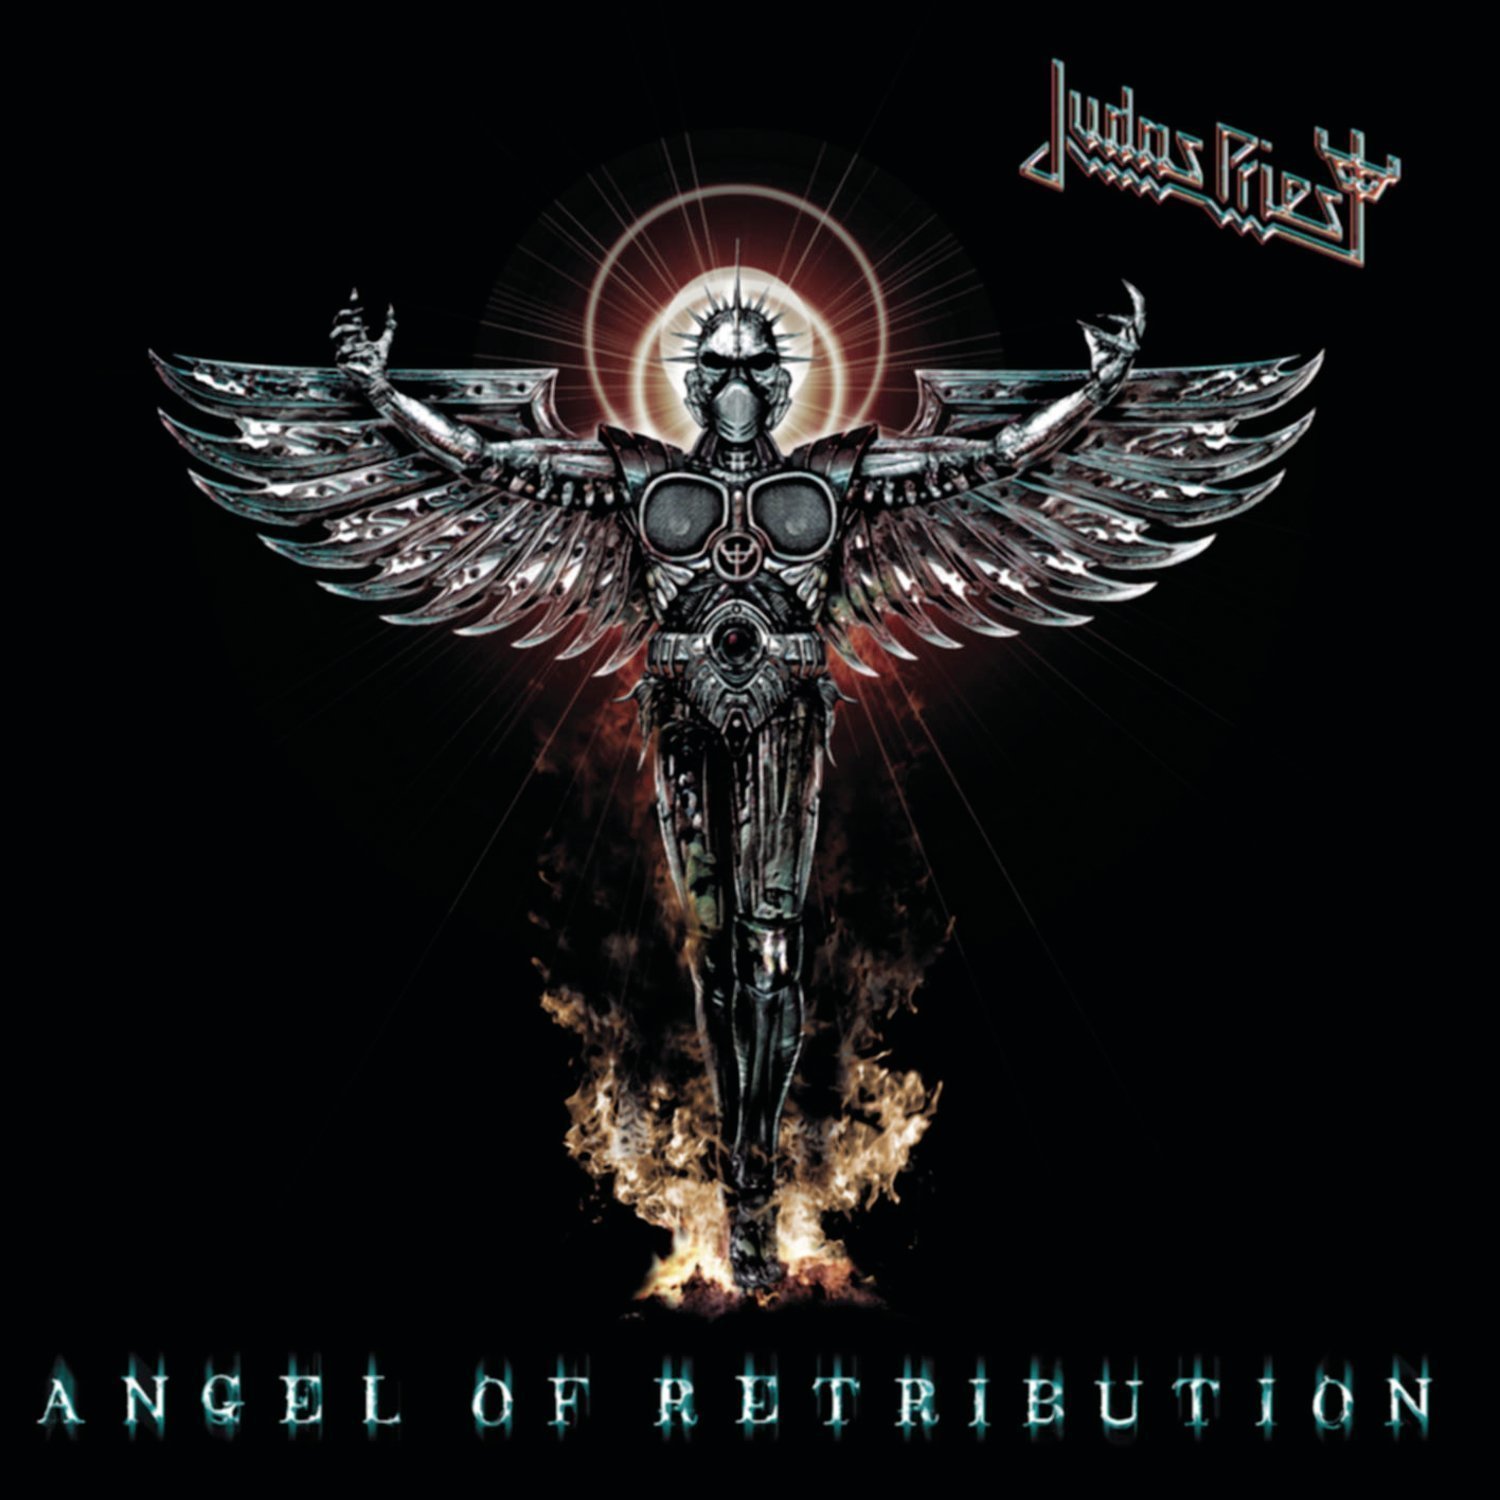 Vinyl Record Judas Priest Angel of Retribution (2 LP)